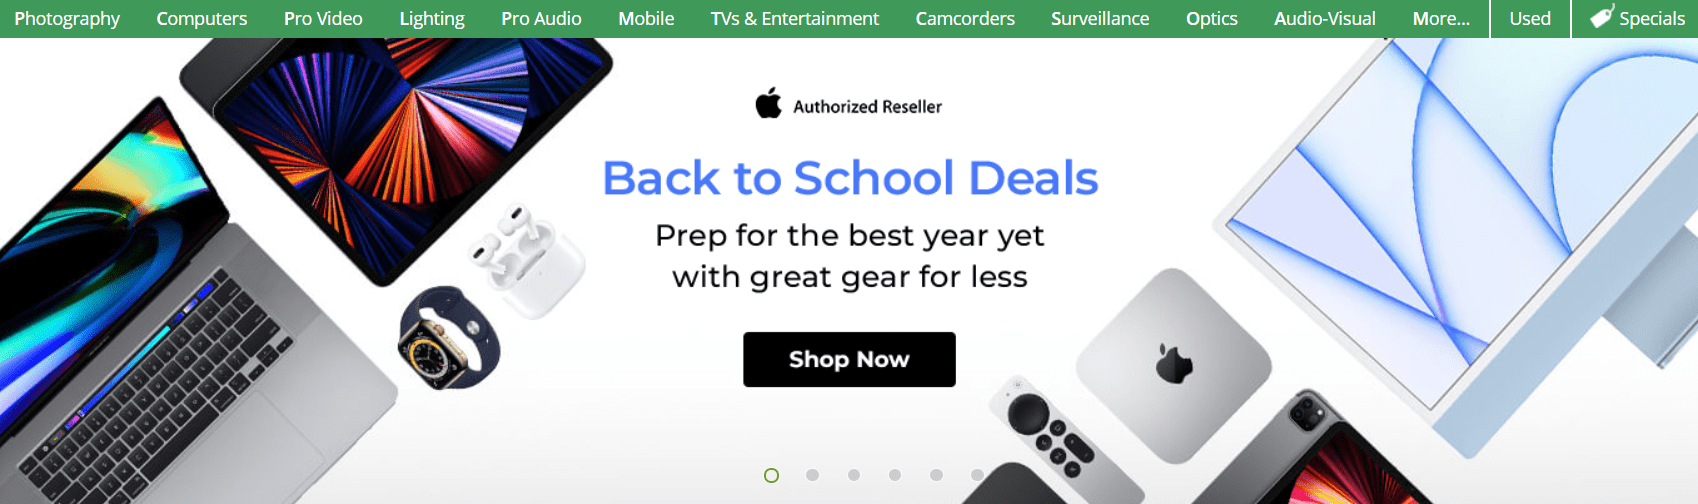 Back to school deals example